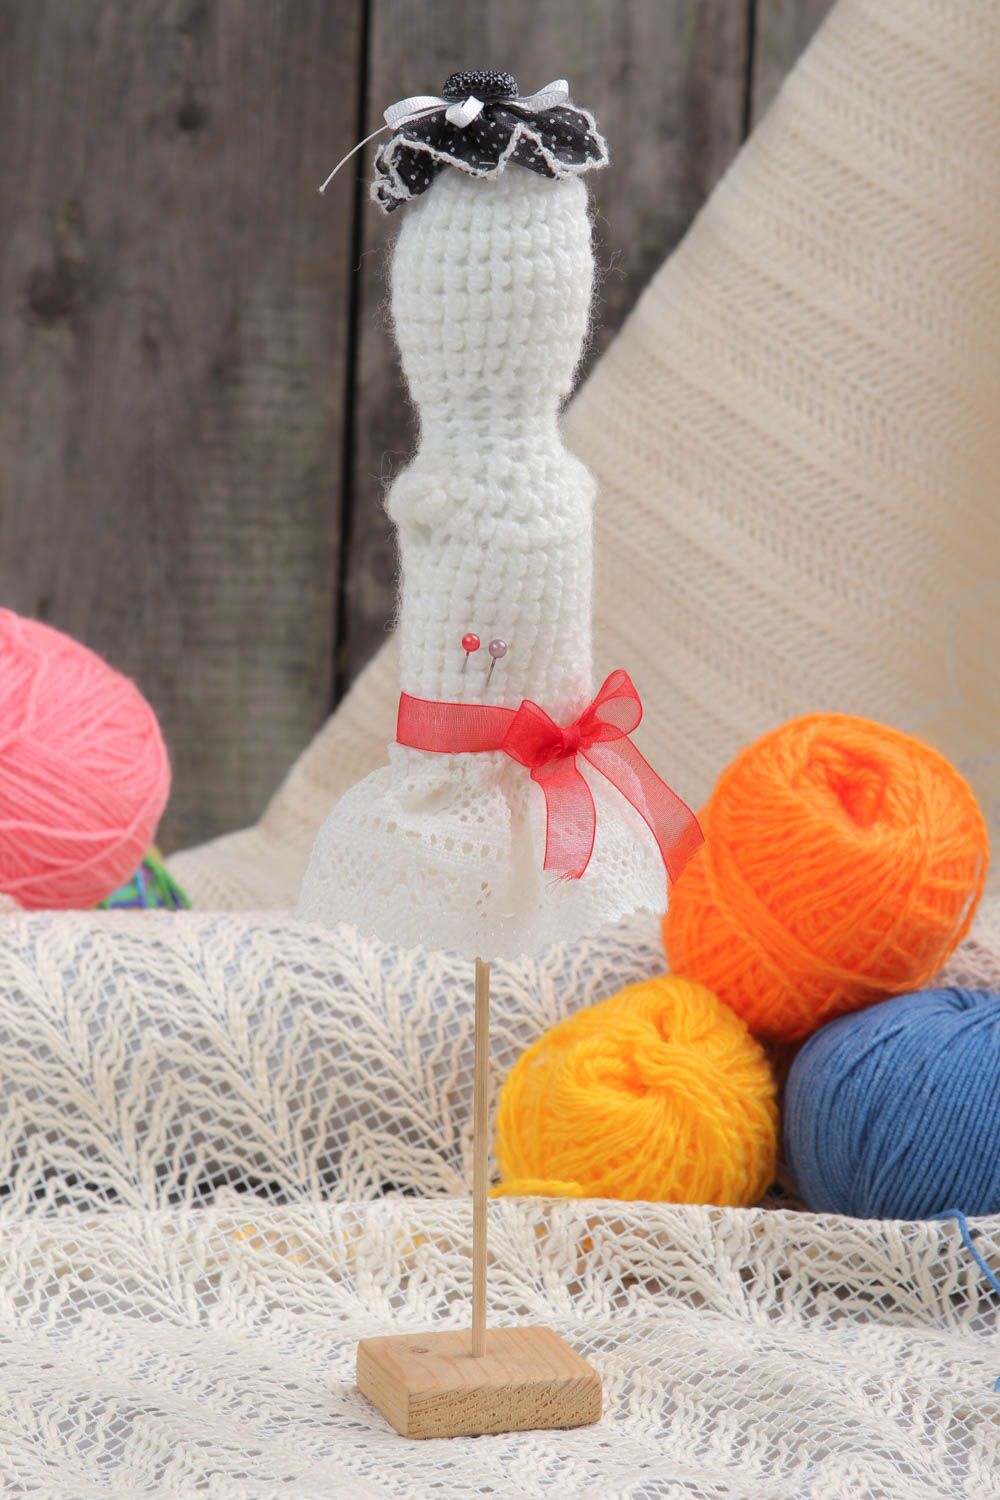 Handmade pin cushion crochet pincushion crochet ideas needlework accessories photo 1